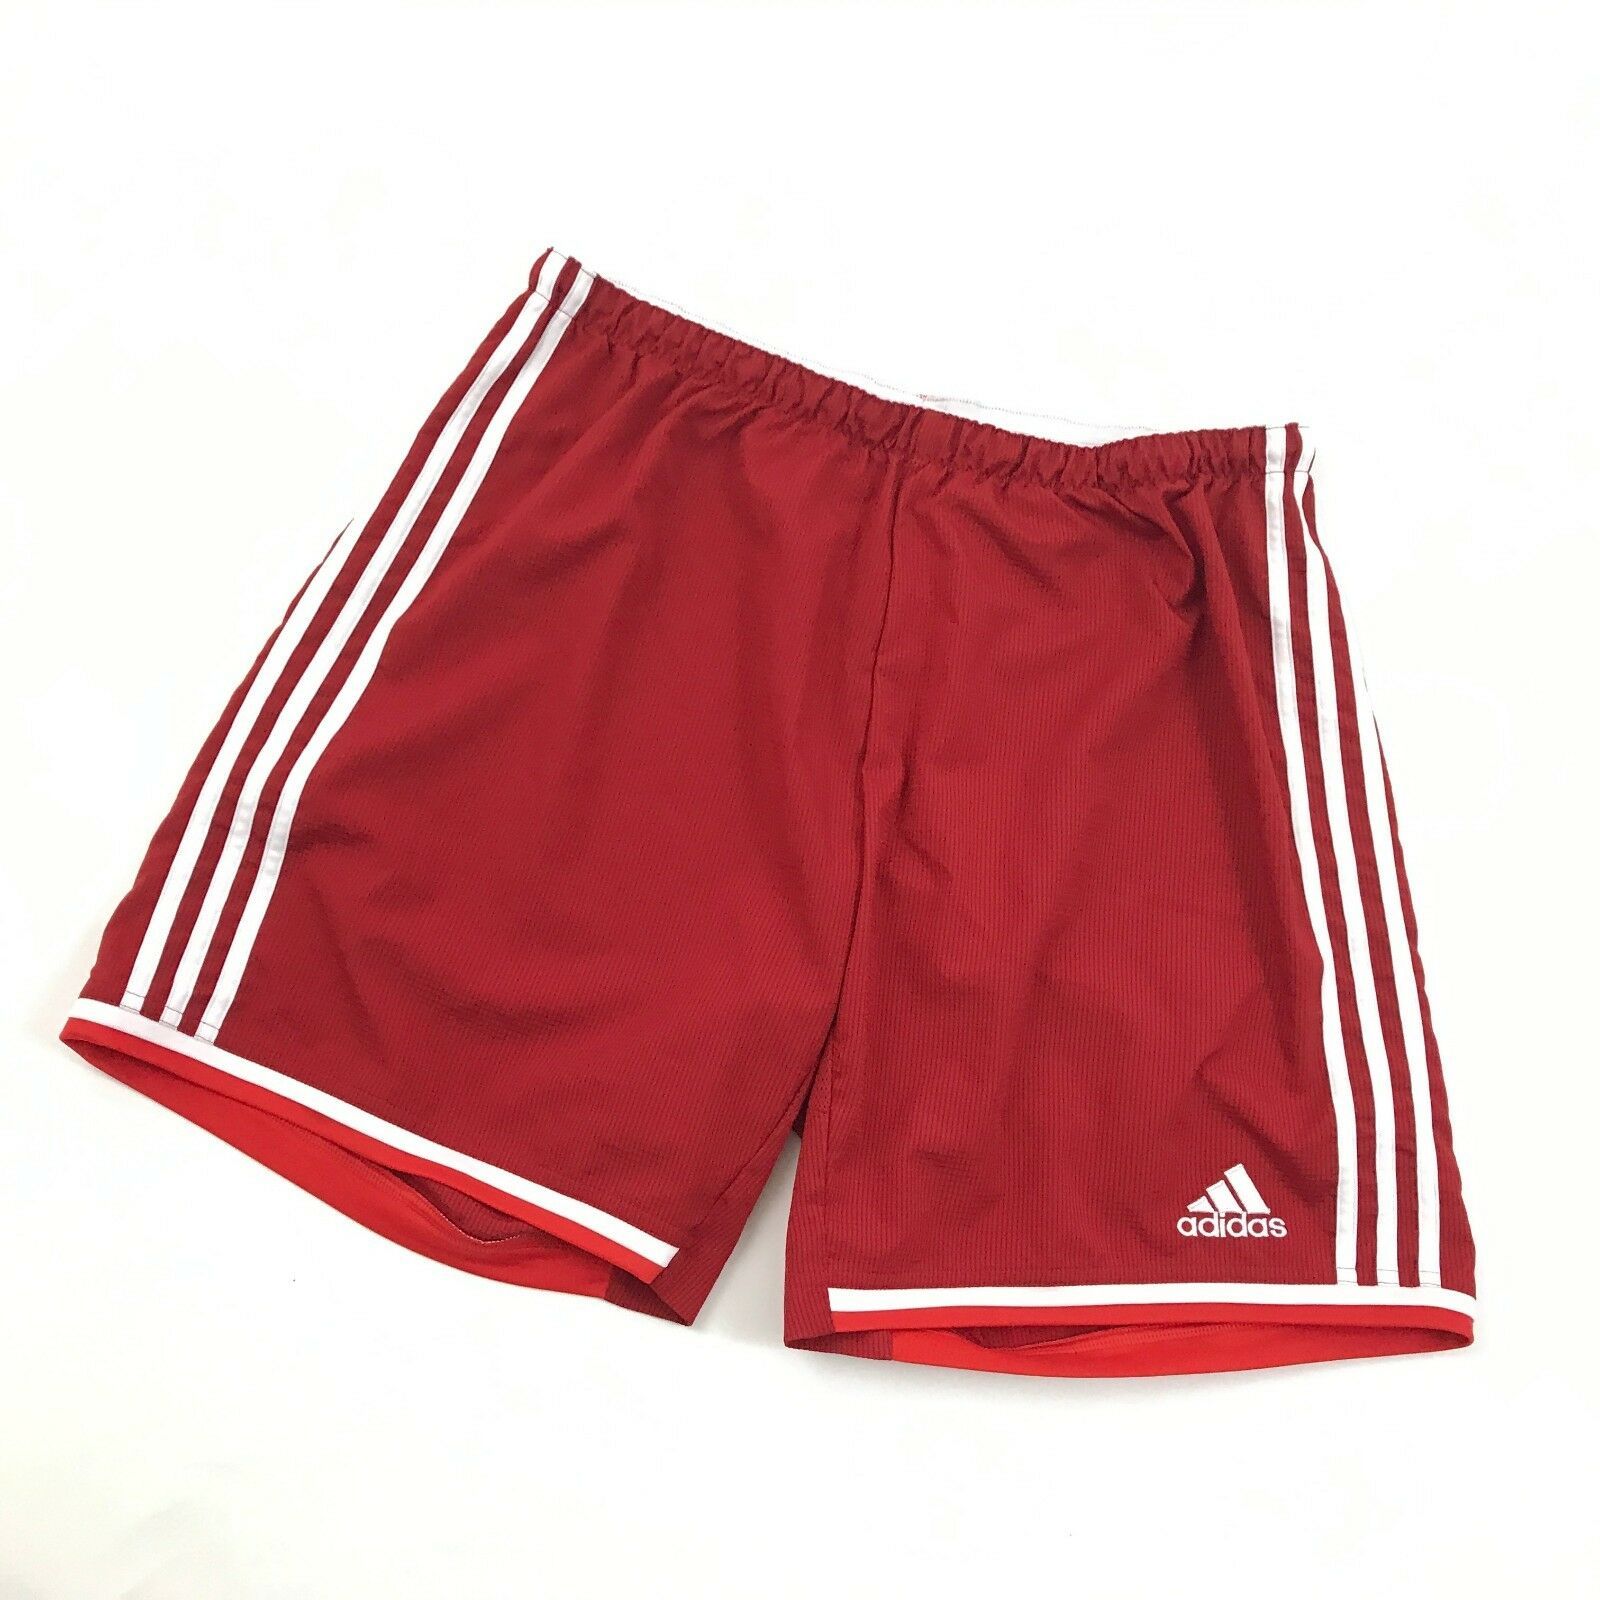 NEW Adidas ADIZERO Running Shorts Size Extra Large Red Unlined Thin ...